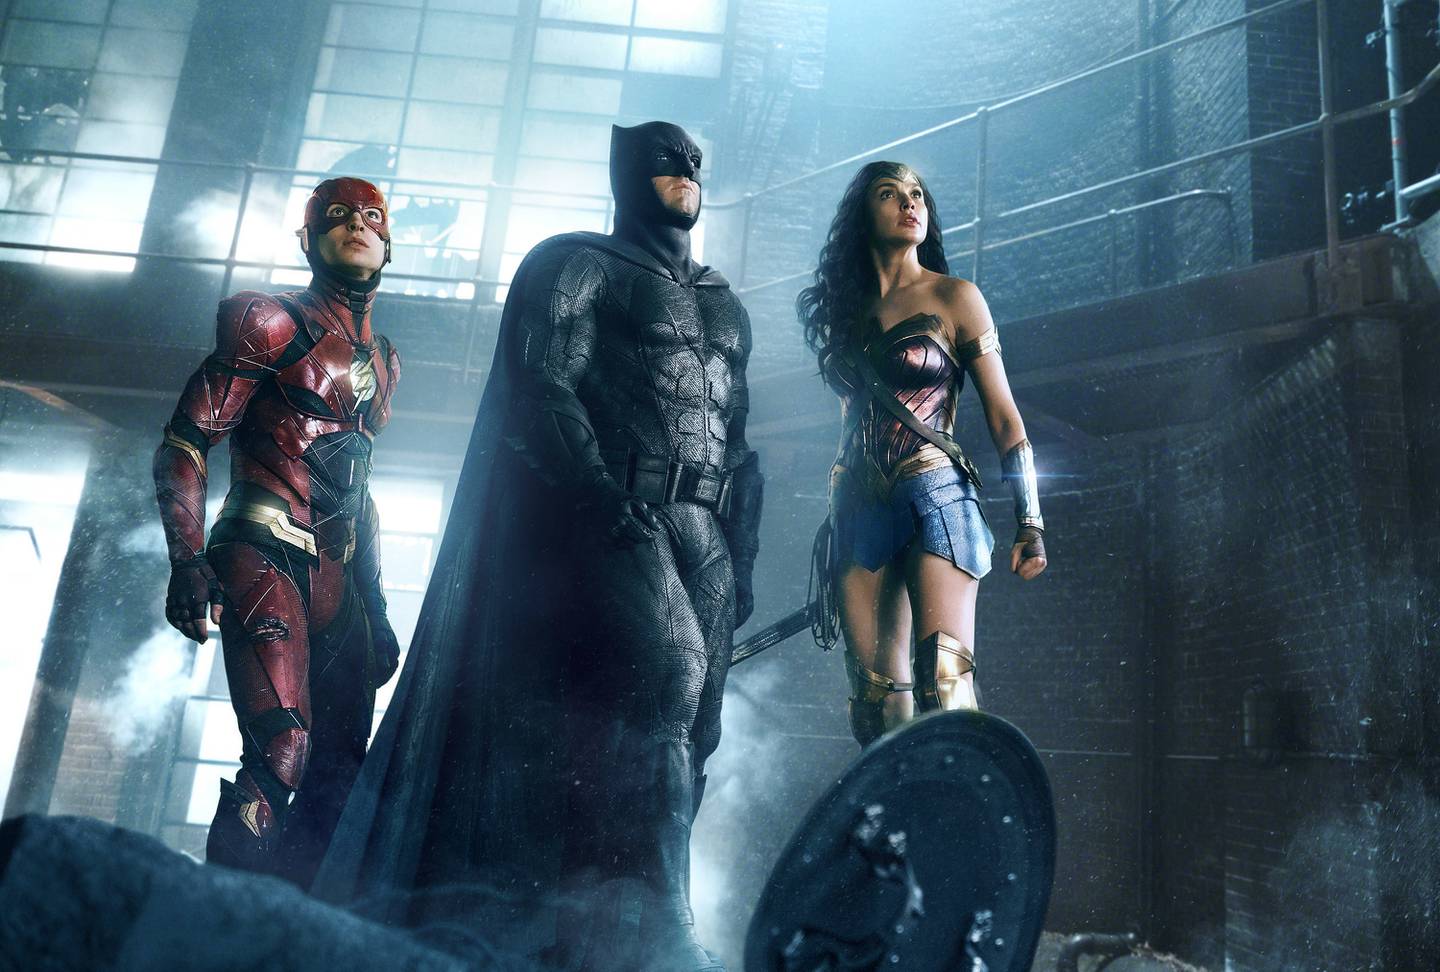 Heltene i Justice League får en ny sjanse, i en fire timer lang, mørkere og dystrere fil slik Zack Snyder ville lage filmen. Det er klart for gjensyn med The Flash (Ezra Miller), Batman (Ben Affleck) Wonder Woman (Gal Gadot) i filmen fra 2017.